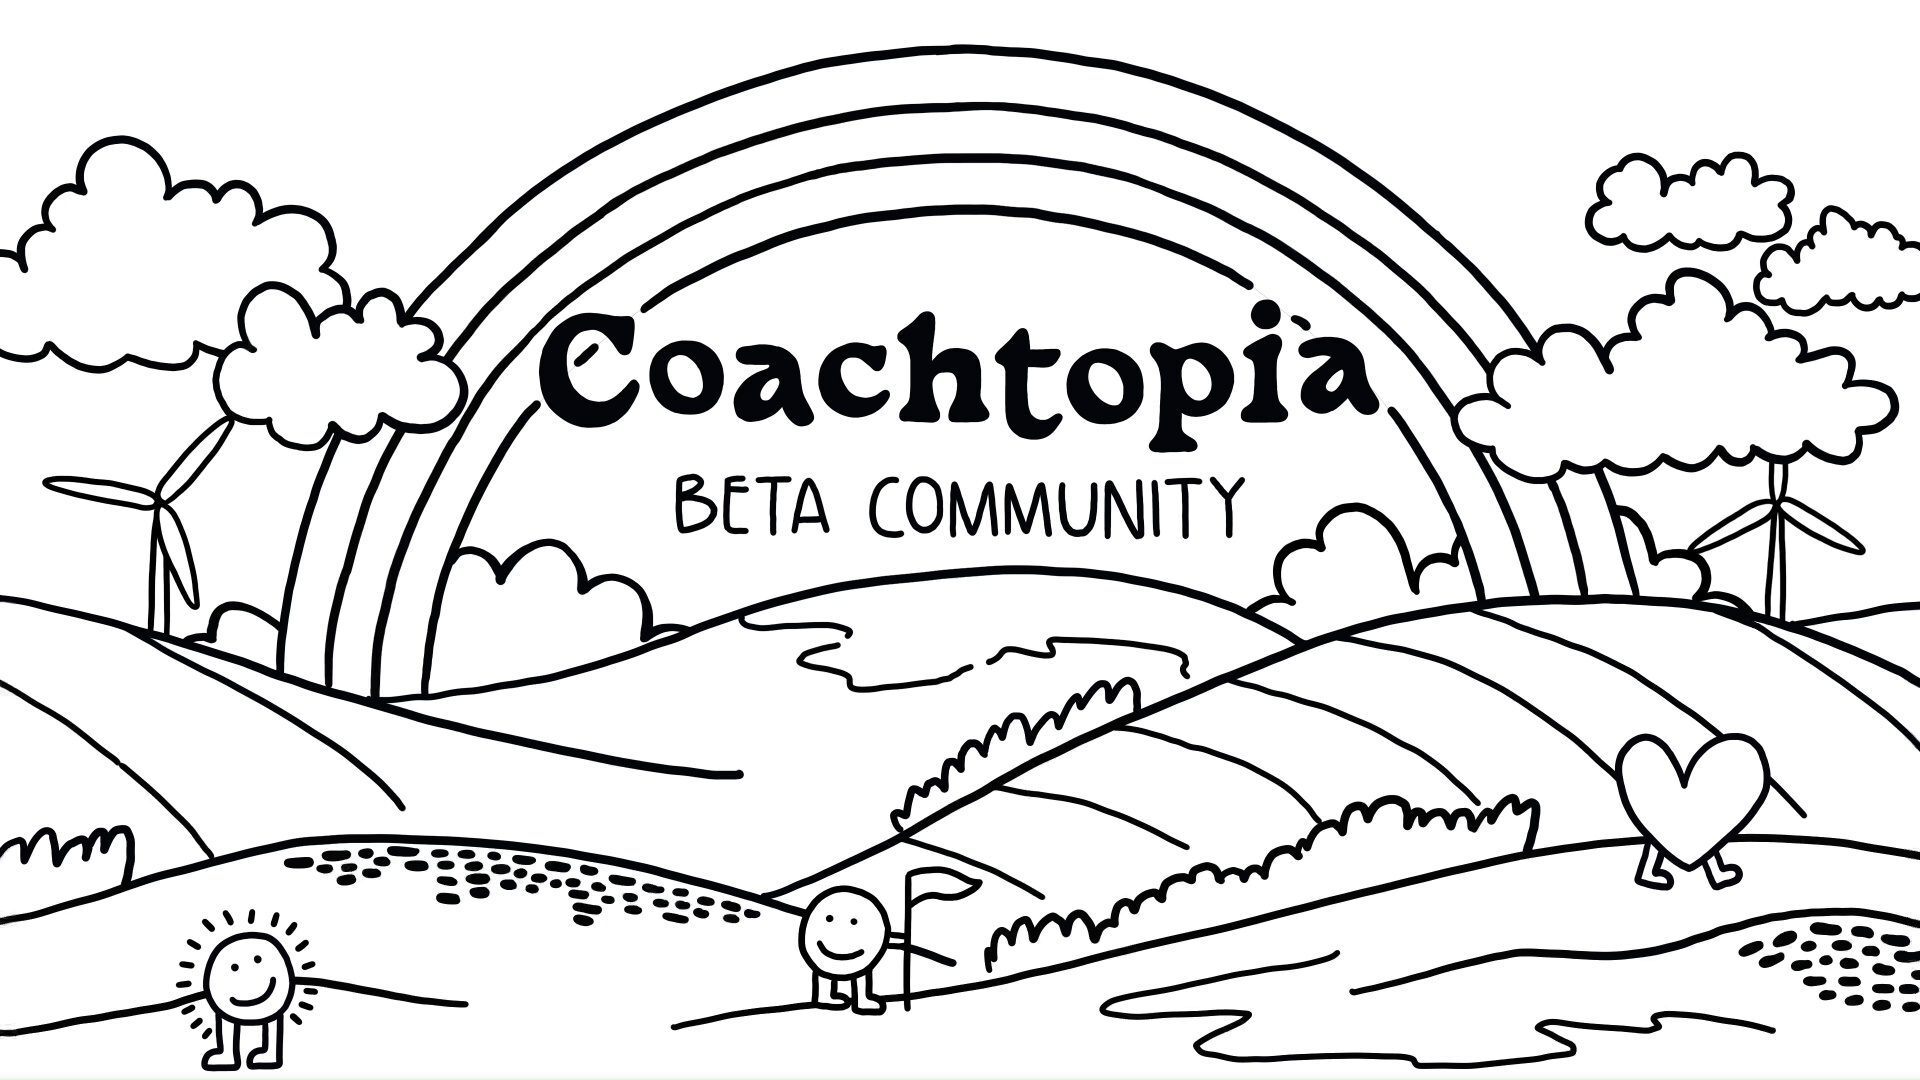 Coachtopia - A Beta Community